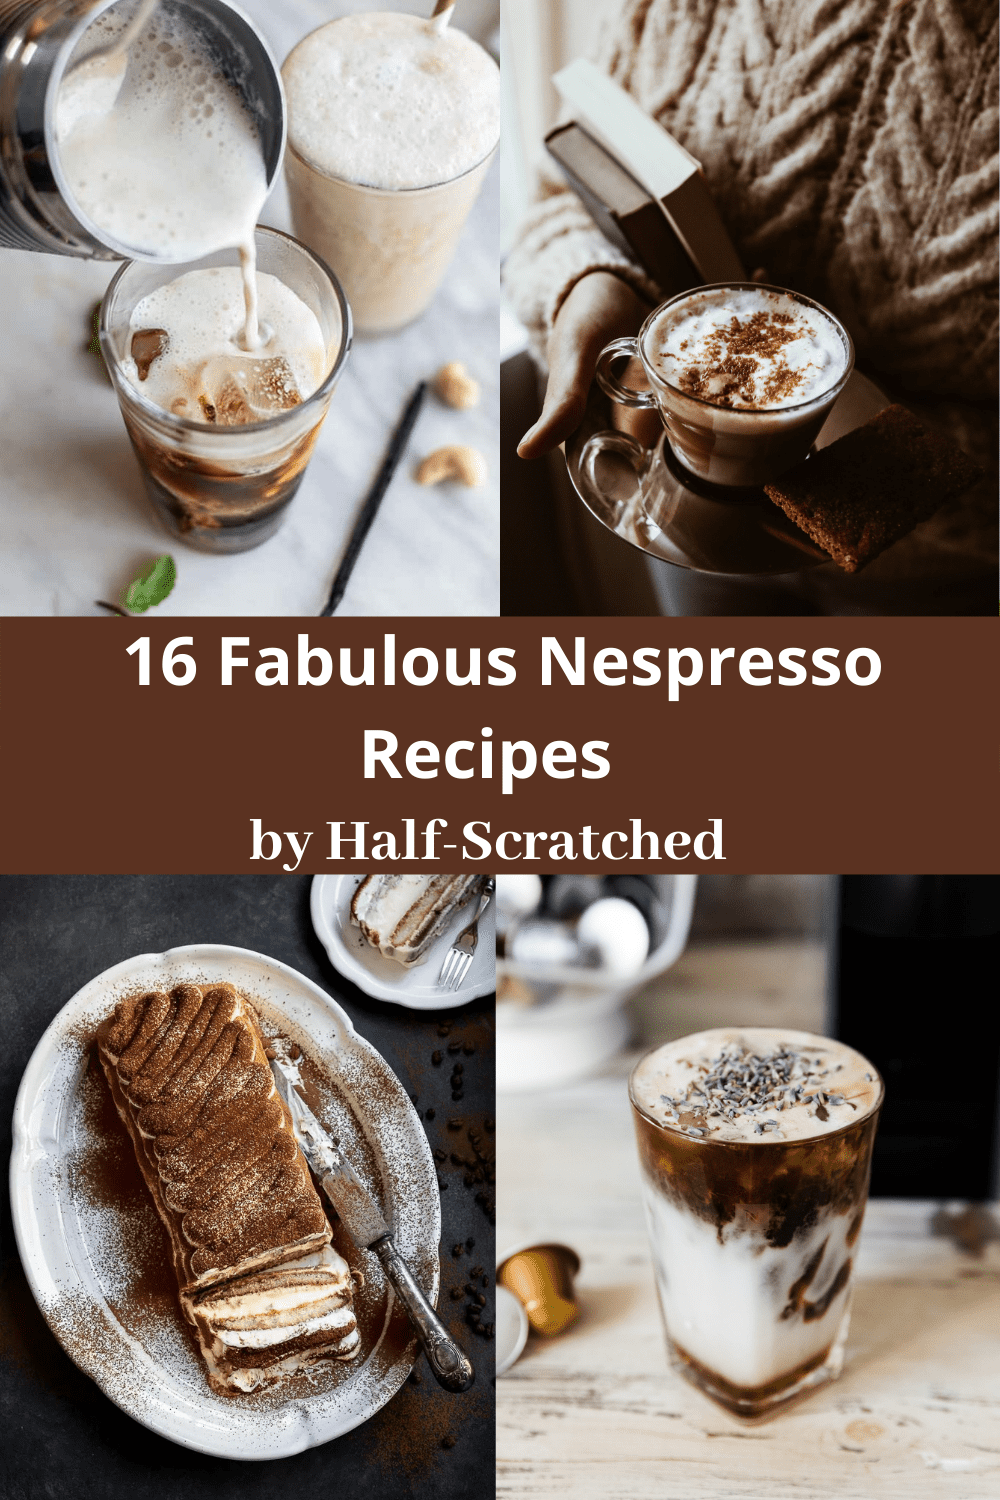 https://www.halfscratched.com/wp-content/uploads/2022/05/16-Fabulous-Nespresso-Recipes-.png